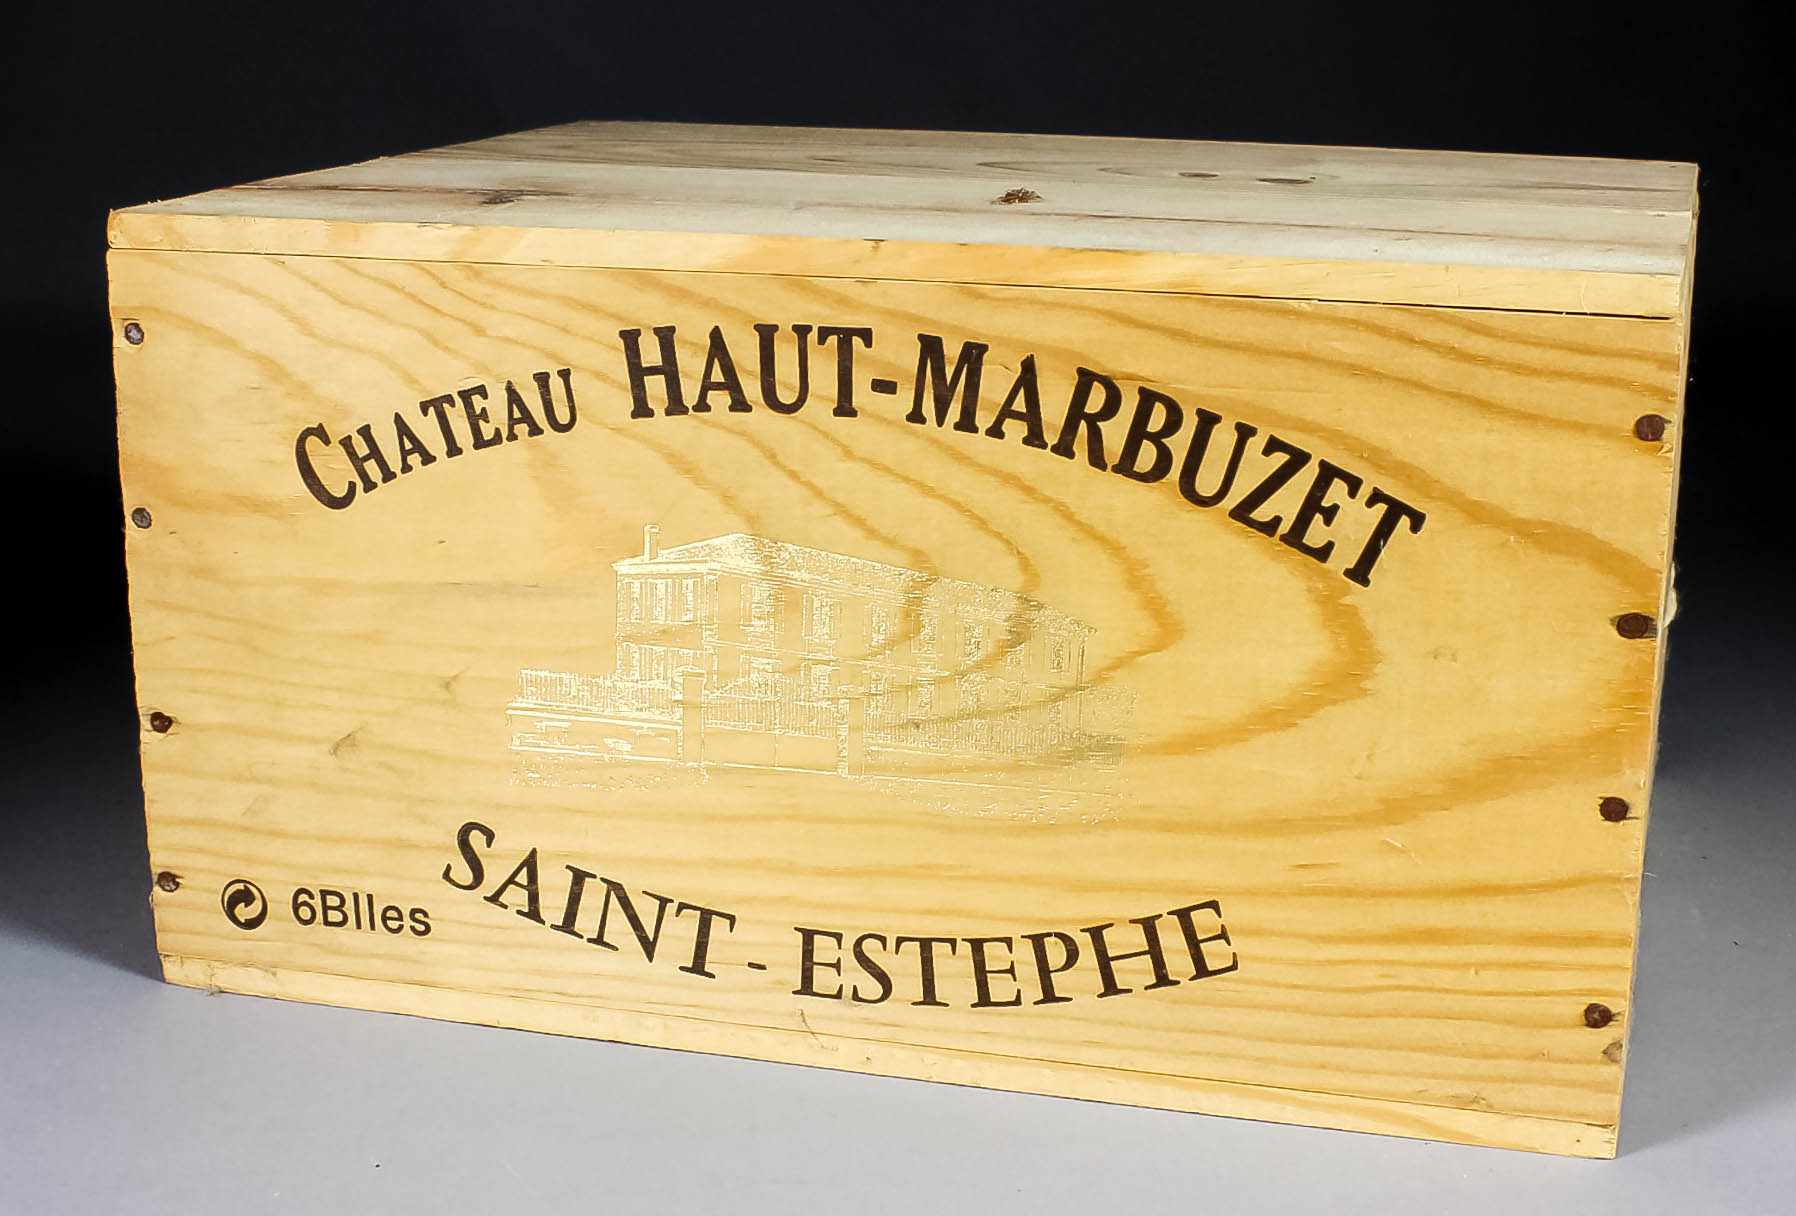 Twelve bottles of 2000 Chateau Haut-Marbuzet (Saint-Estephe) (contained in two sealed six bottle